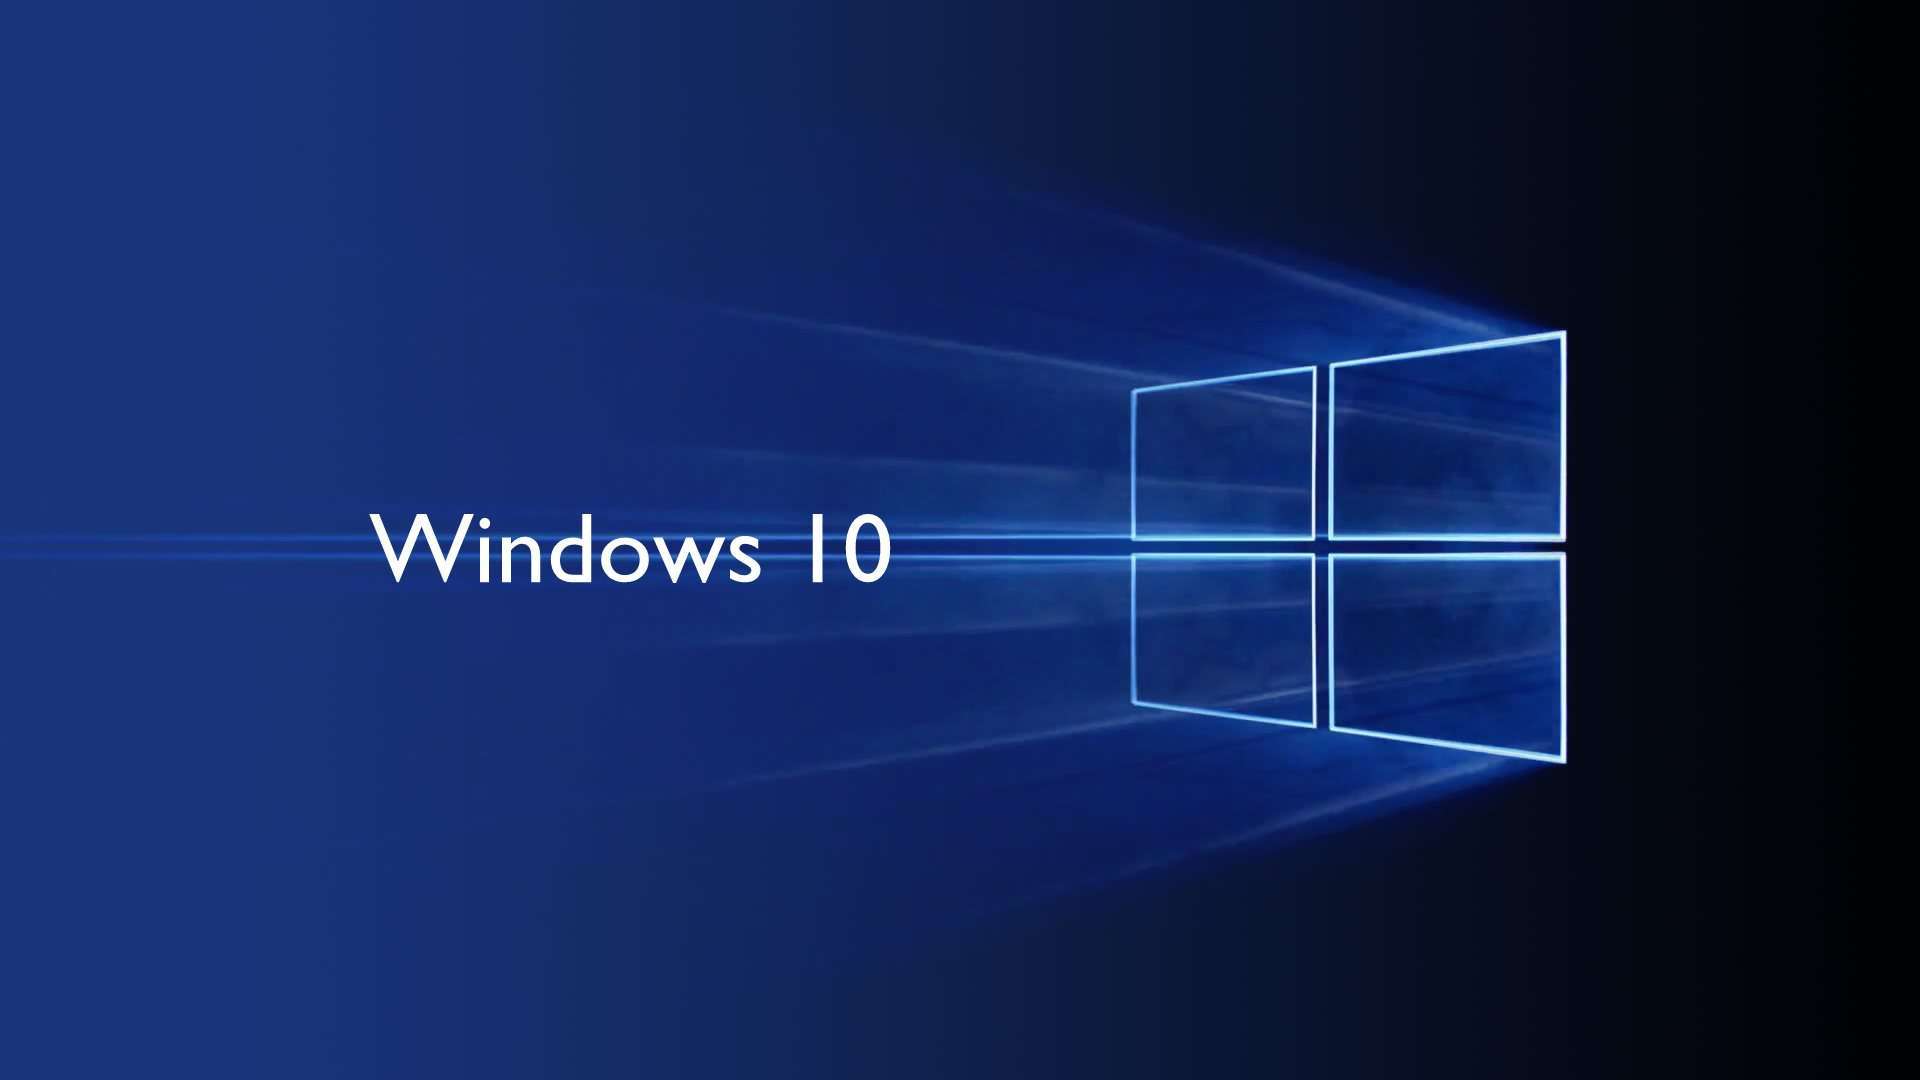 Wallpaper Windows 10 Hd 3d Image Num 40